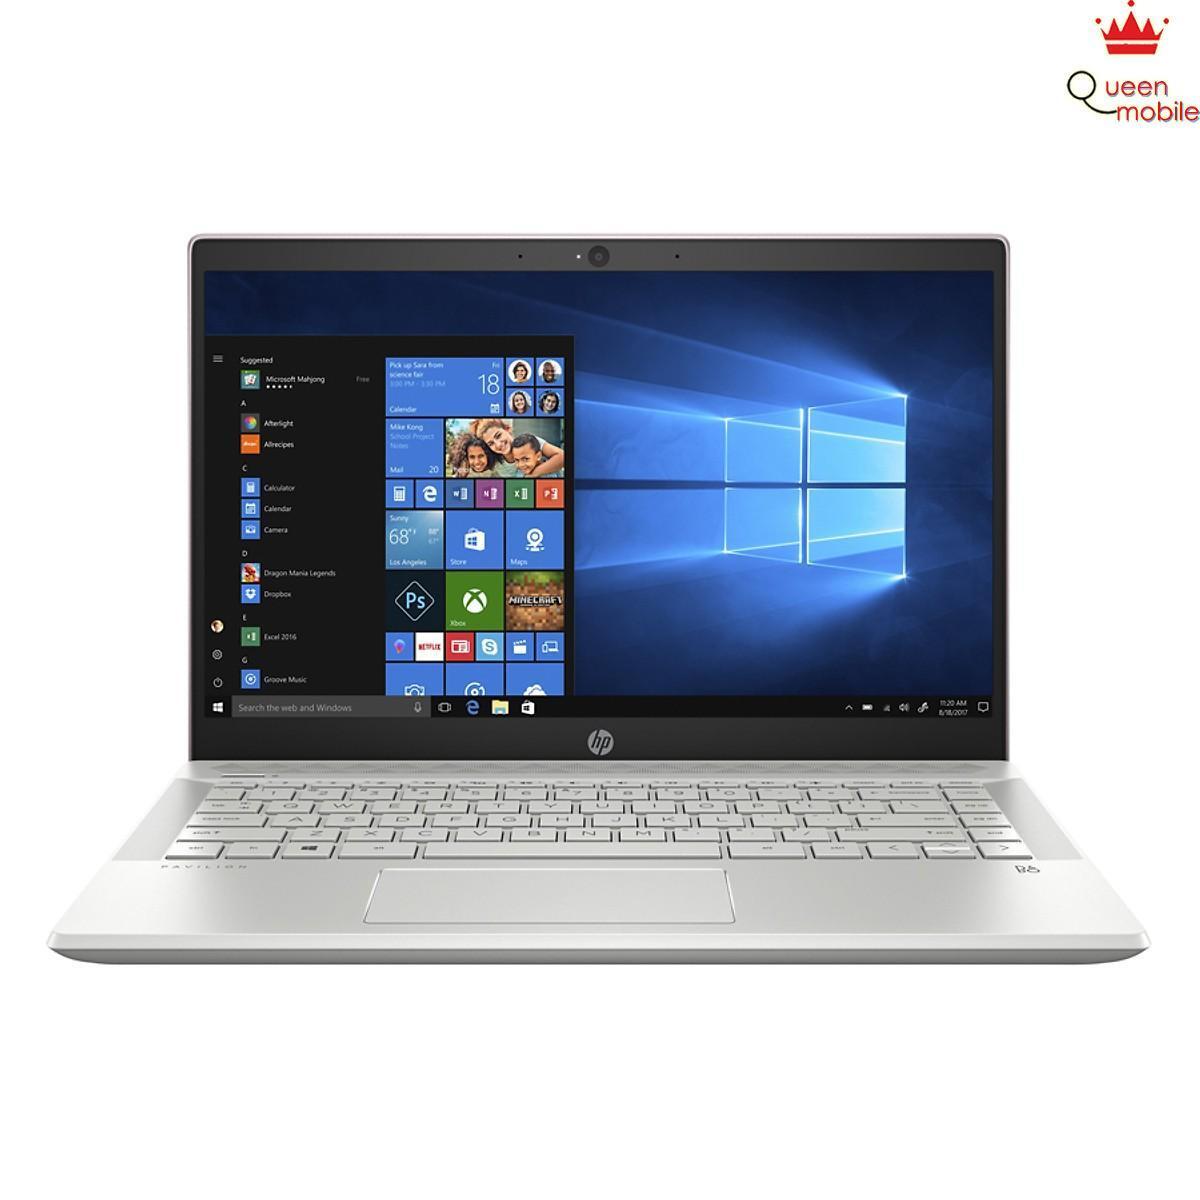 Laptop HP Pavilion 14-ce1013TU 5JN20PA - Intel core i5-8265U, 4GB RAM, HDD 1TB, Intel HD Graphics, 14 inch